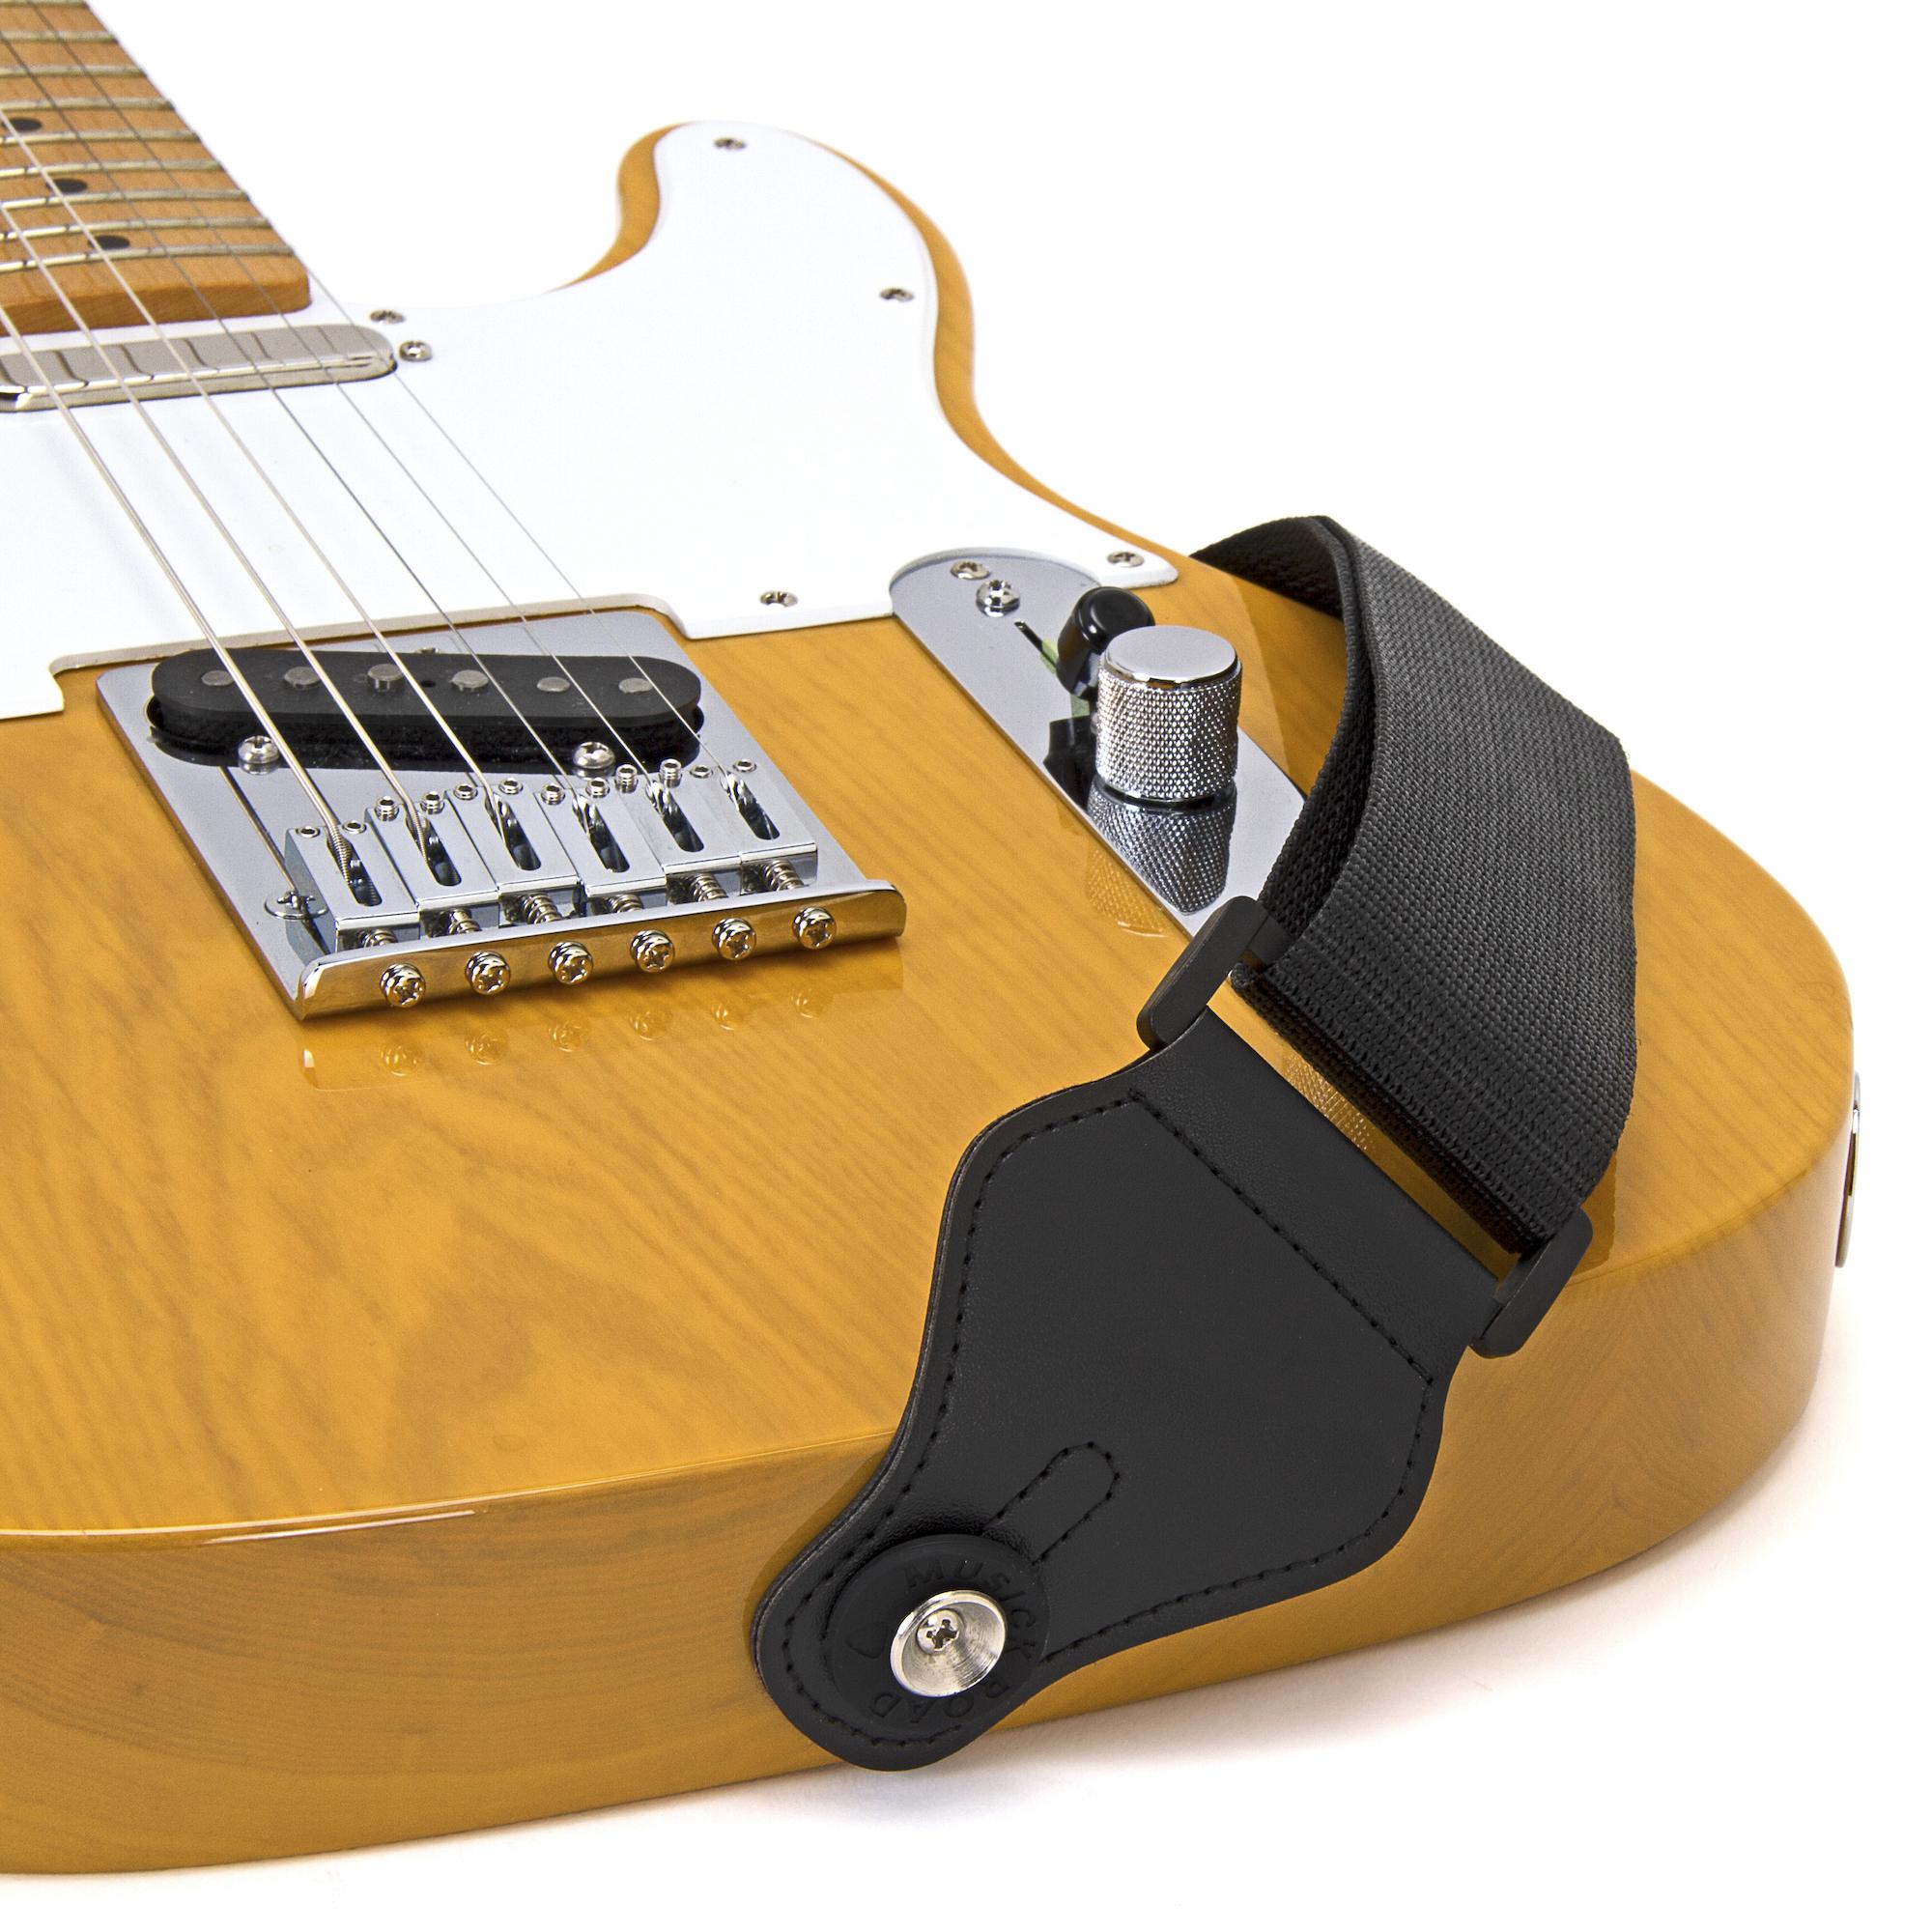 Durable 100% Fine Cotton Strap Guitar Strap Unique Lead Lock Design 6 Easy Access Pick Holders Genuine Leather End Pieces Comfortable-Adjustable Electric or Acoustic Guitar Accessory. 